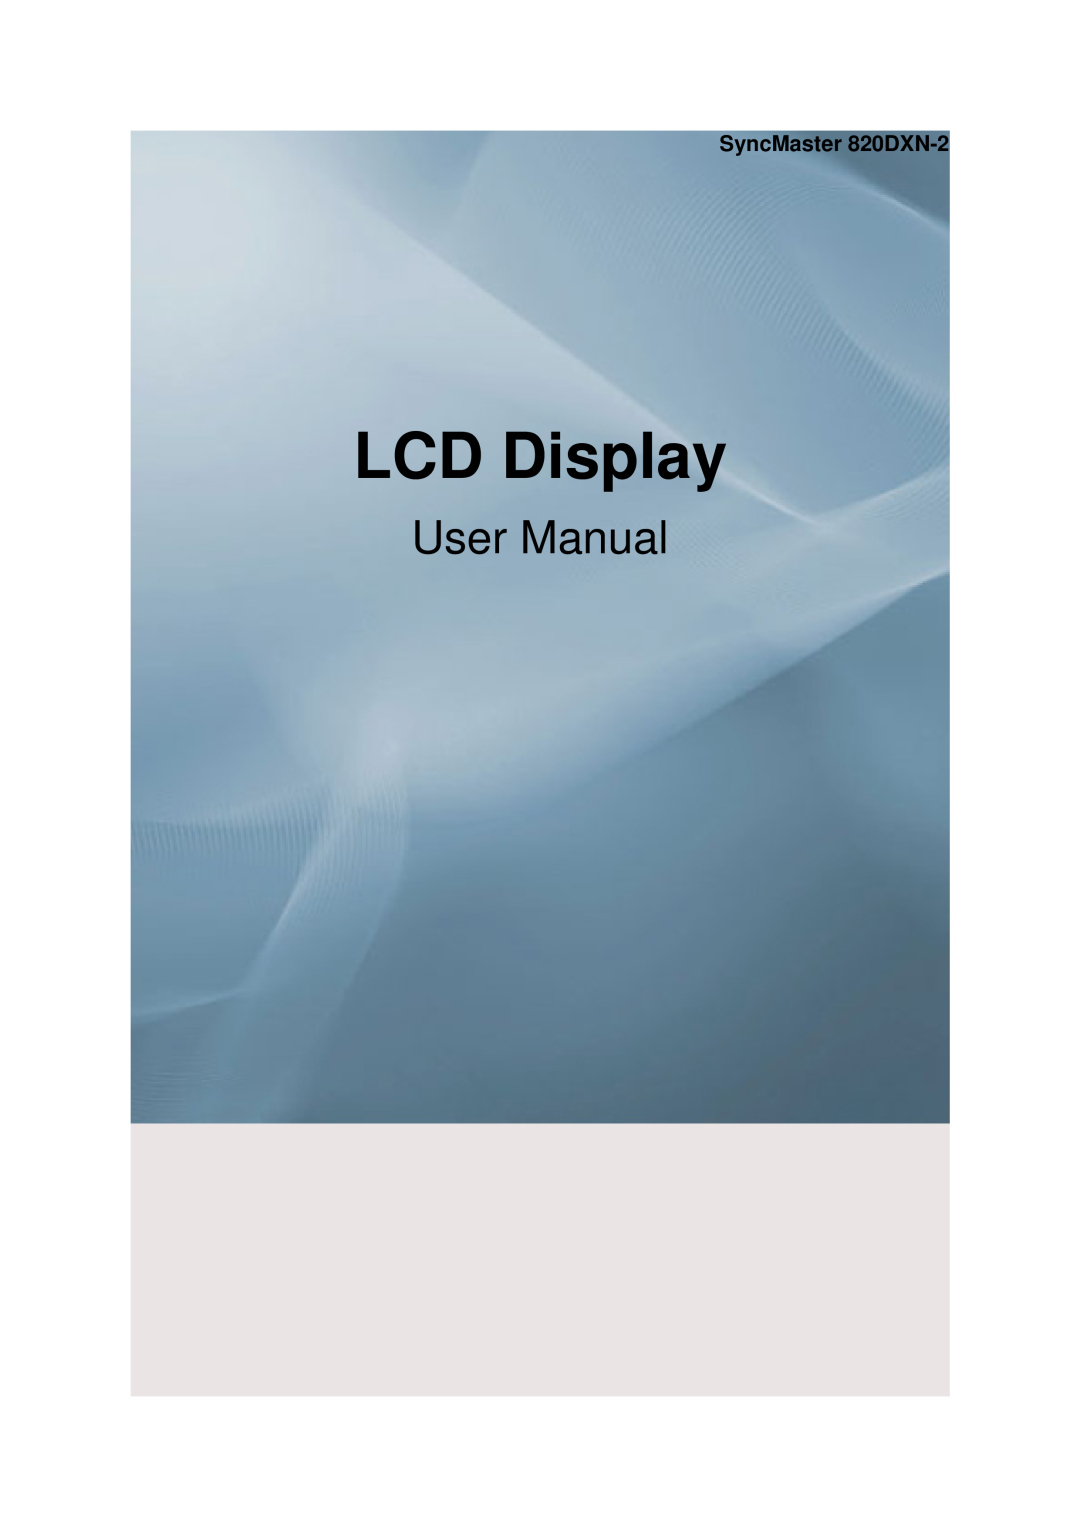 Samsung LH82BVTLBF/EN, LH82BVTMBF/EN, LH82BVSLBF/EN, LH82BVTLBF/XJ manual SyncMaster 820DXN-2, LCD Display, User Manual 